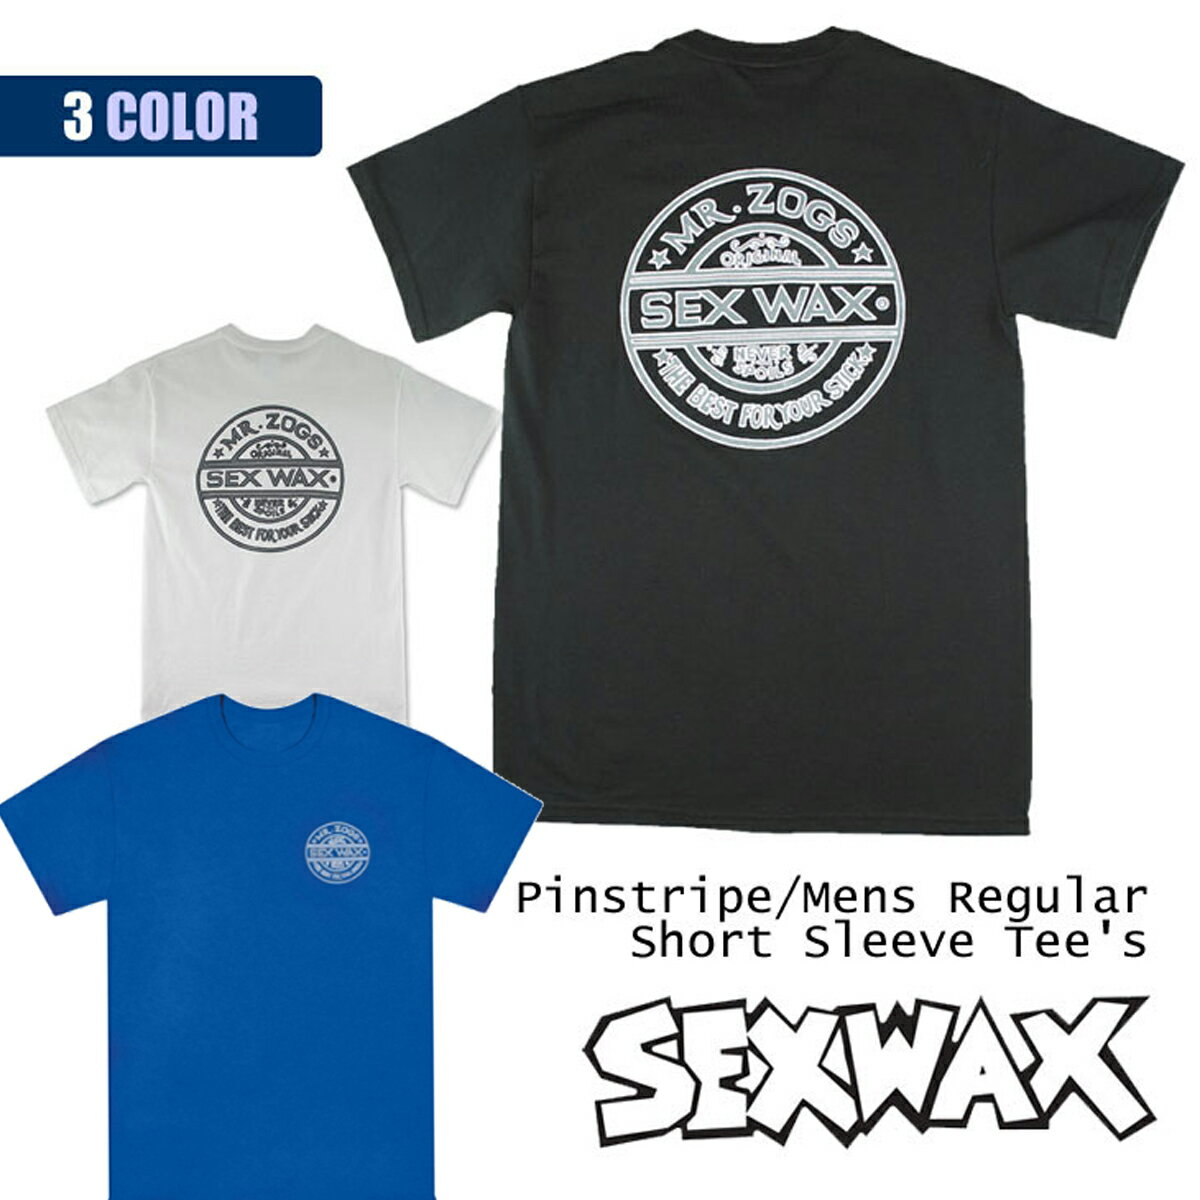 SEXWAX セックスワックス Tシャツ Pinstripe Mens Regular Short Sleeve Tee 039 s 半袖 ロゴ ブルー ホワイト ブラック メンズ 品番 010131300016 日本正規品